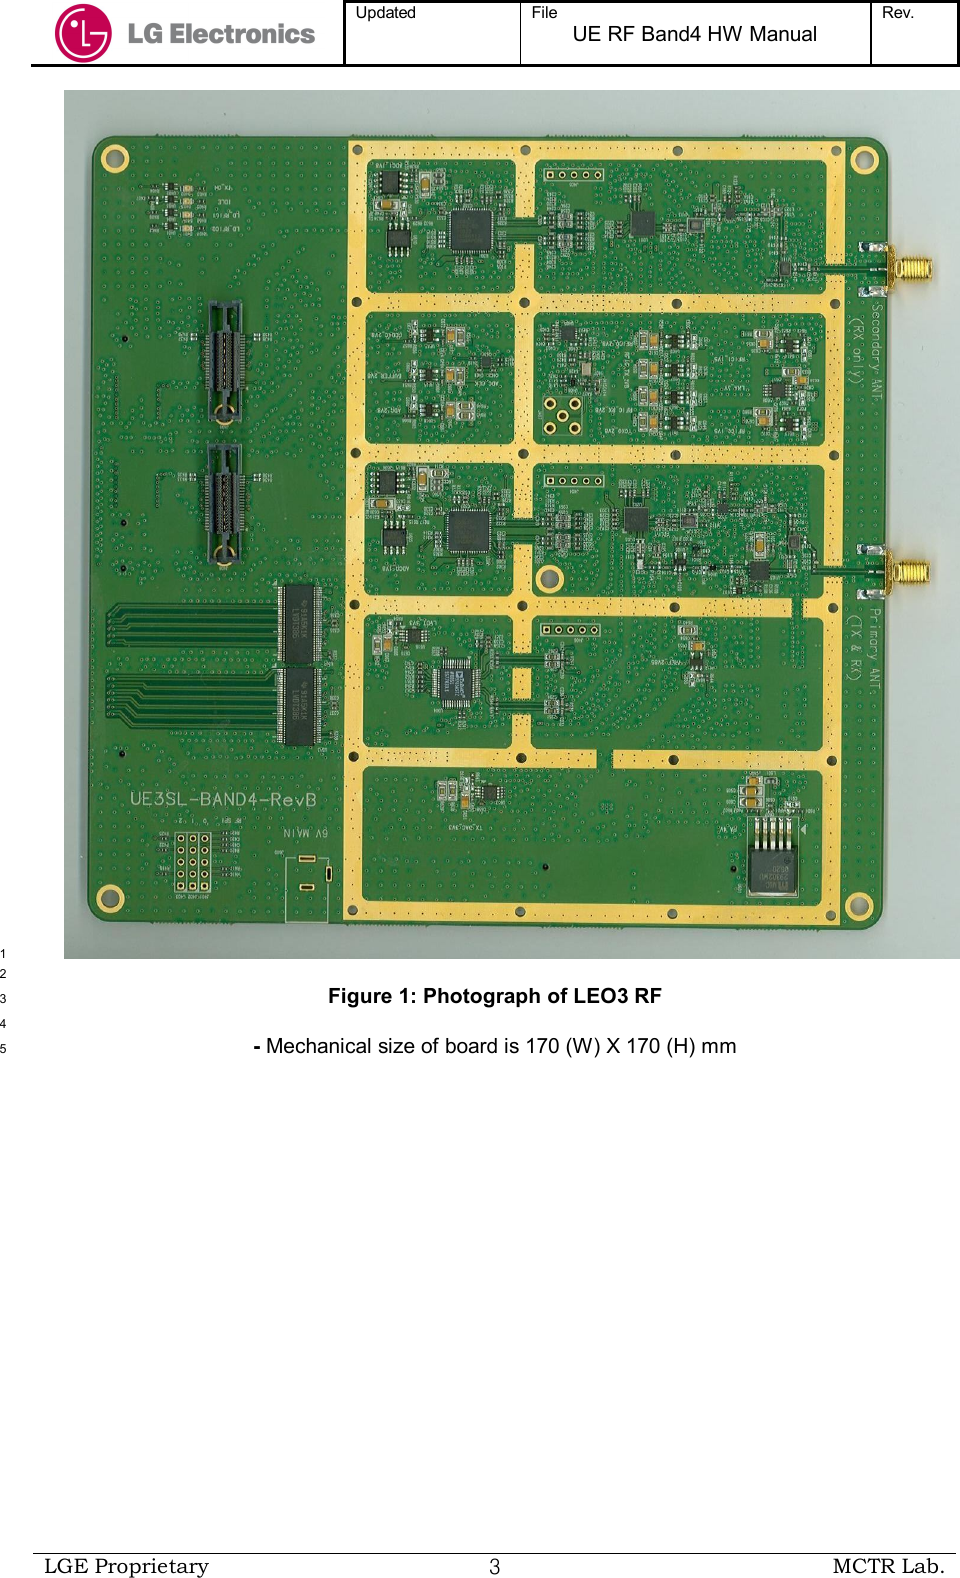  Updated  File UE RF Band4 HW Manual Rev.    LGE Proprietary  ３ MCTR Lab.   1  2 Figure 1: Photograph of LEO3 RF 3  4 - Mechanical size of board is 170 (W) X 170 (H) mm5 